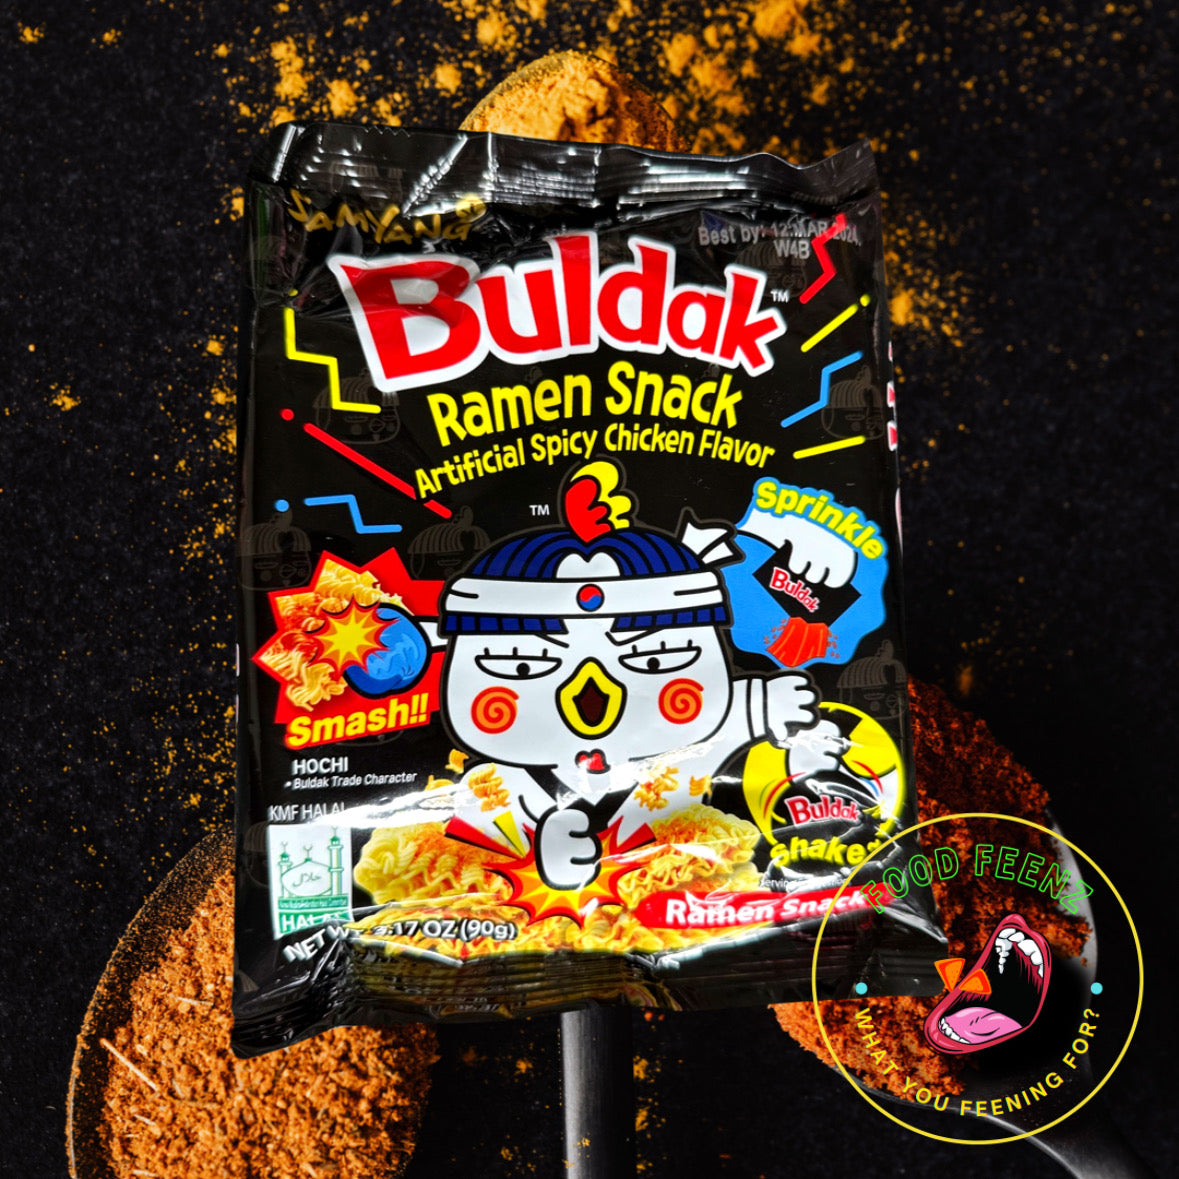 Buldak Smash & Eat Spicy Chicken Ramen Snack